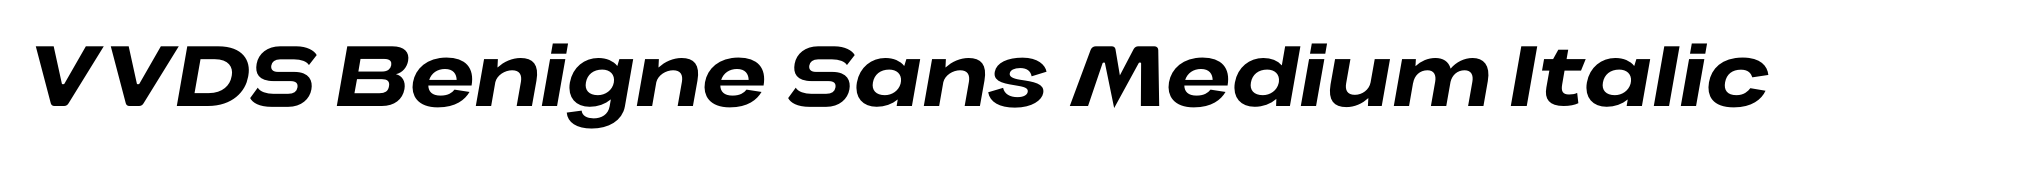 VVDS Benigne Sans Medium Italic image